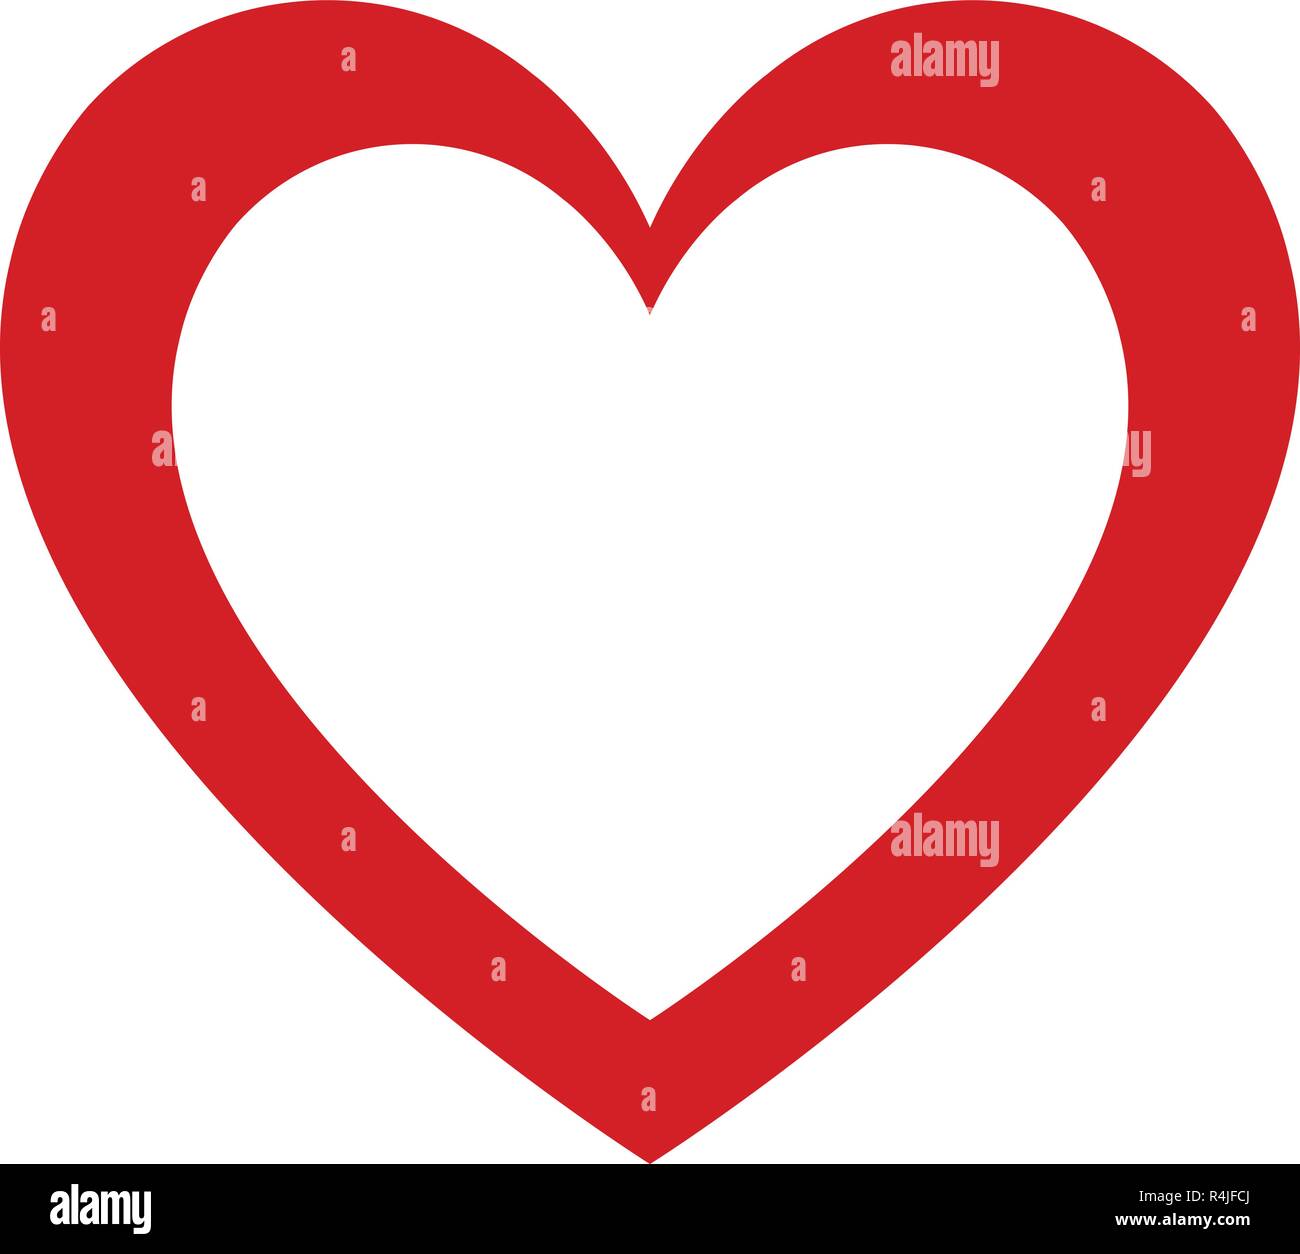 Rotes Herz Design Grafik Vektor Icon Valentines Und Liebhaber Konzept Doppel Herz Theme Stock Vektorgrafik Alamy